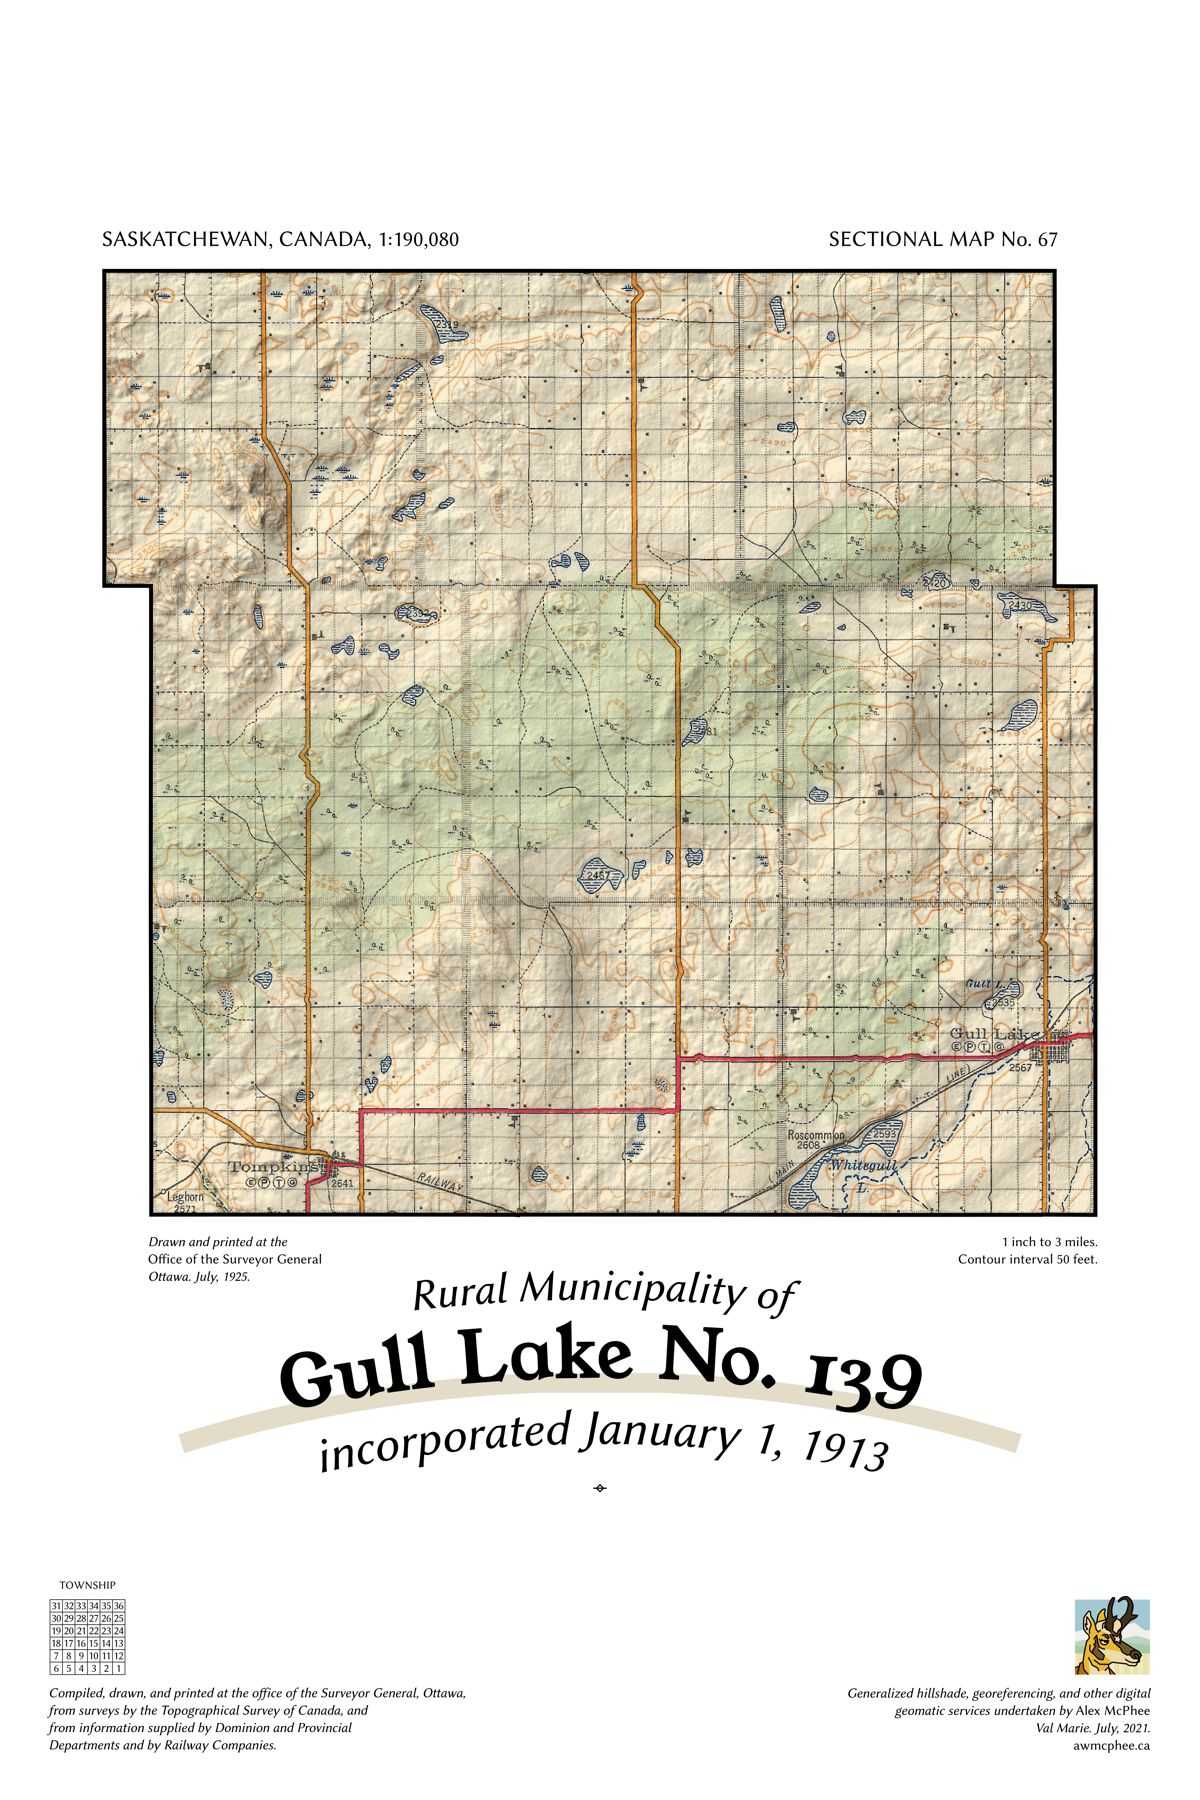 A map of the Rural Municipality of Gull Lake No. 139.